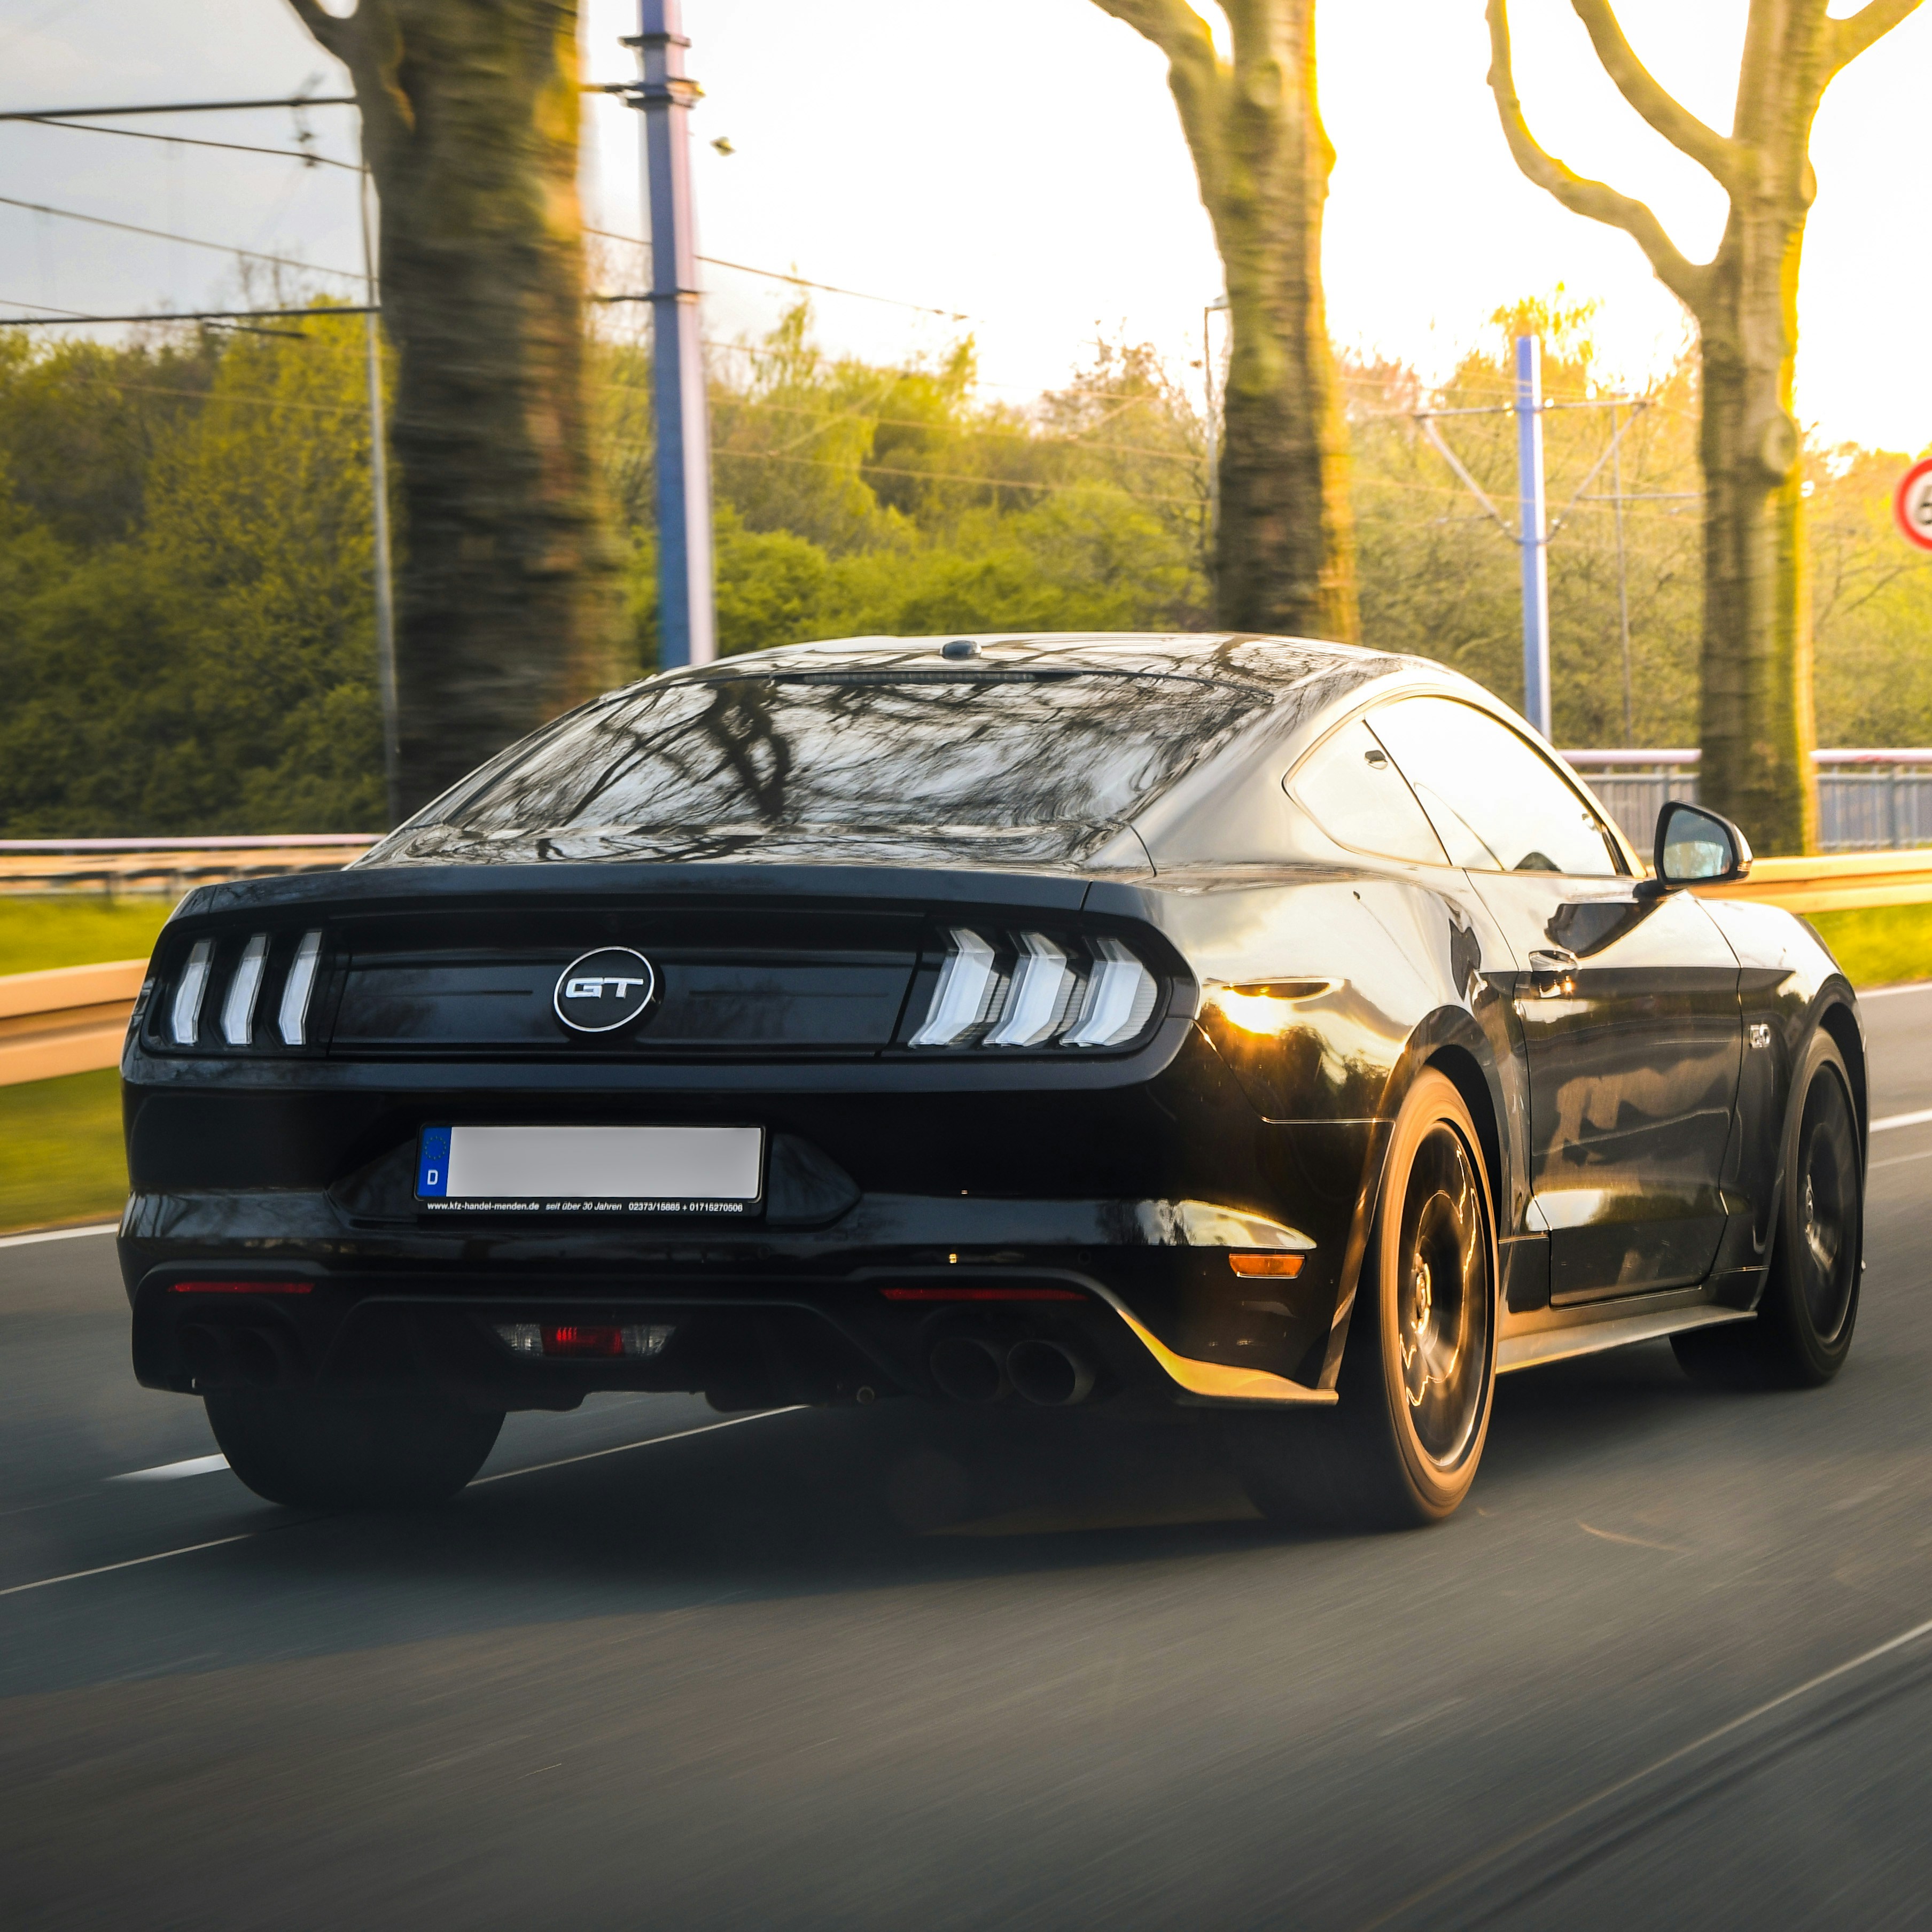 Ford Mustang GT on german Highway near Dortmund